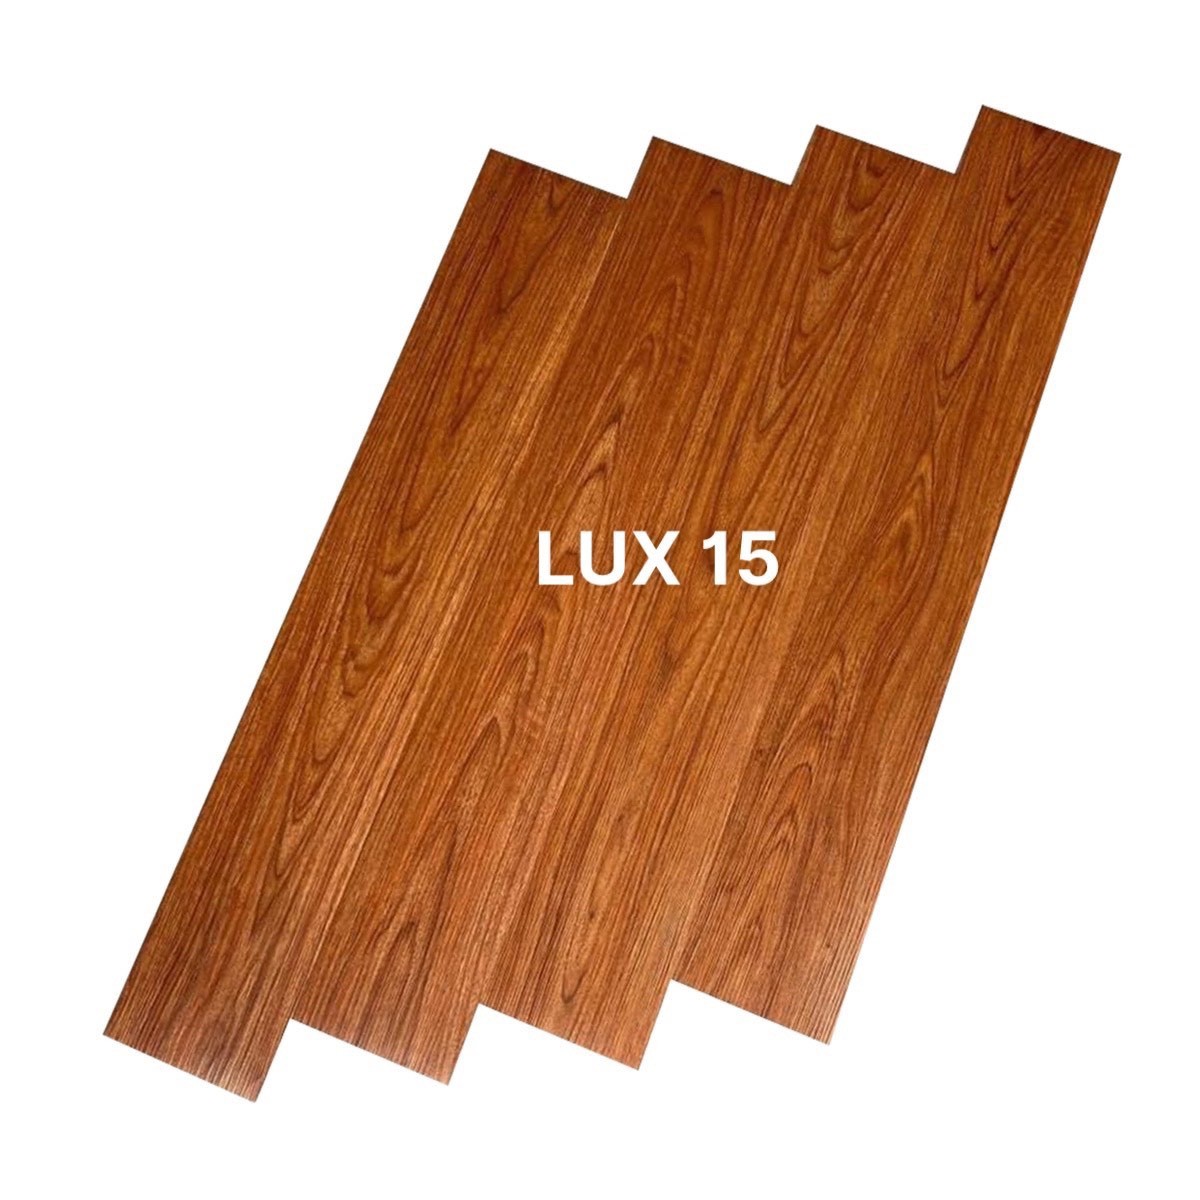 Sàn nhựa dán keo Lux 15